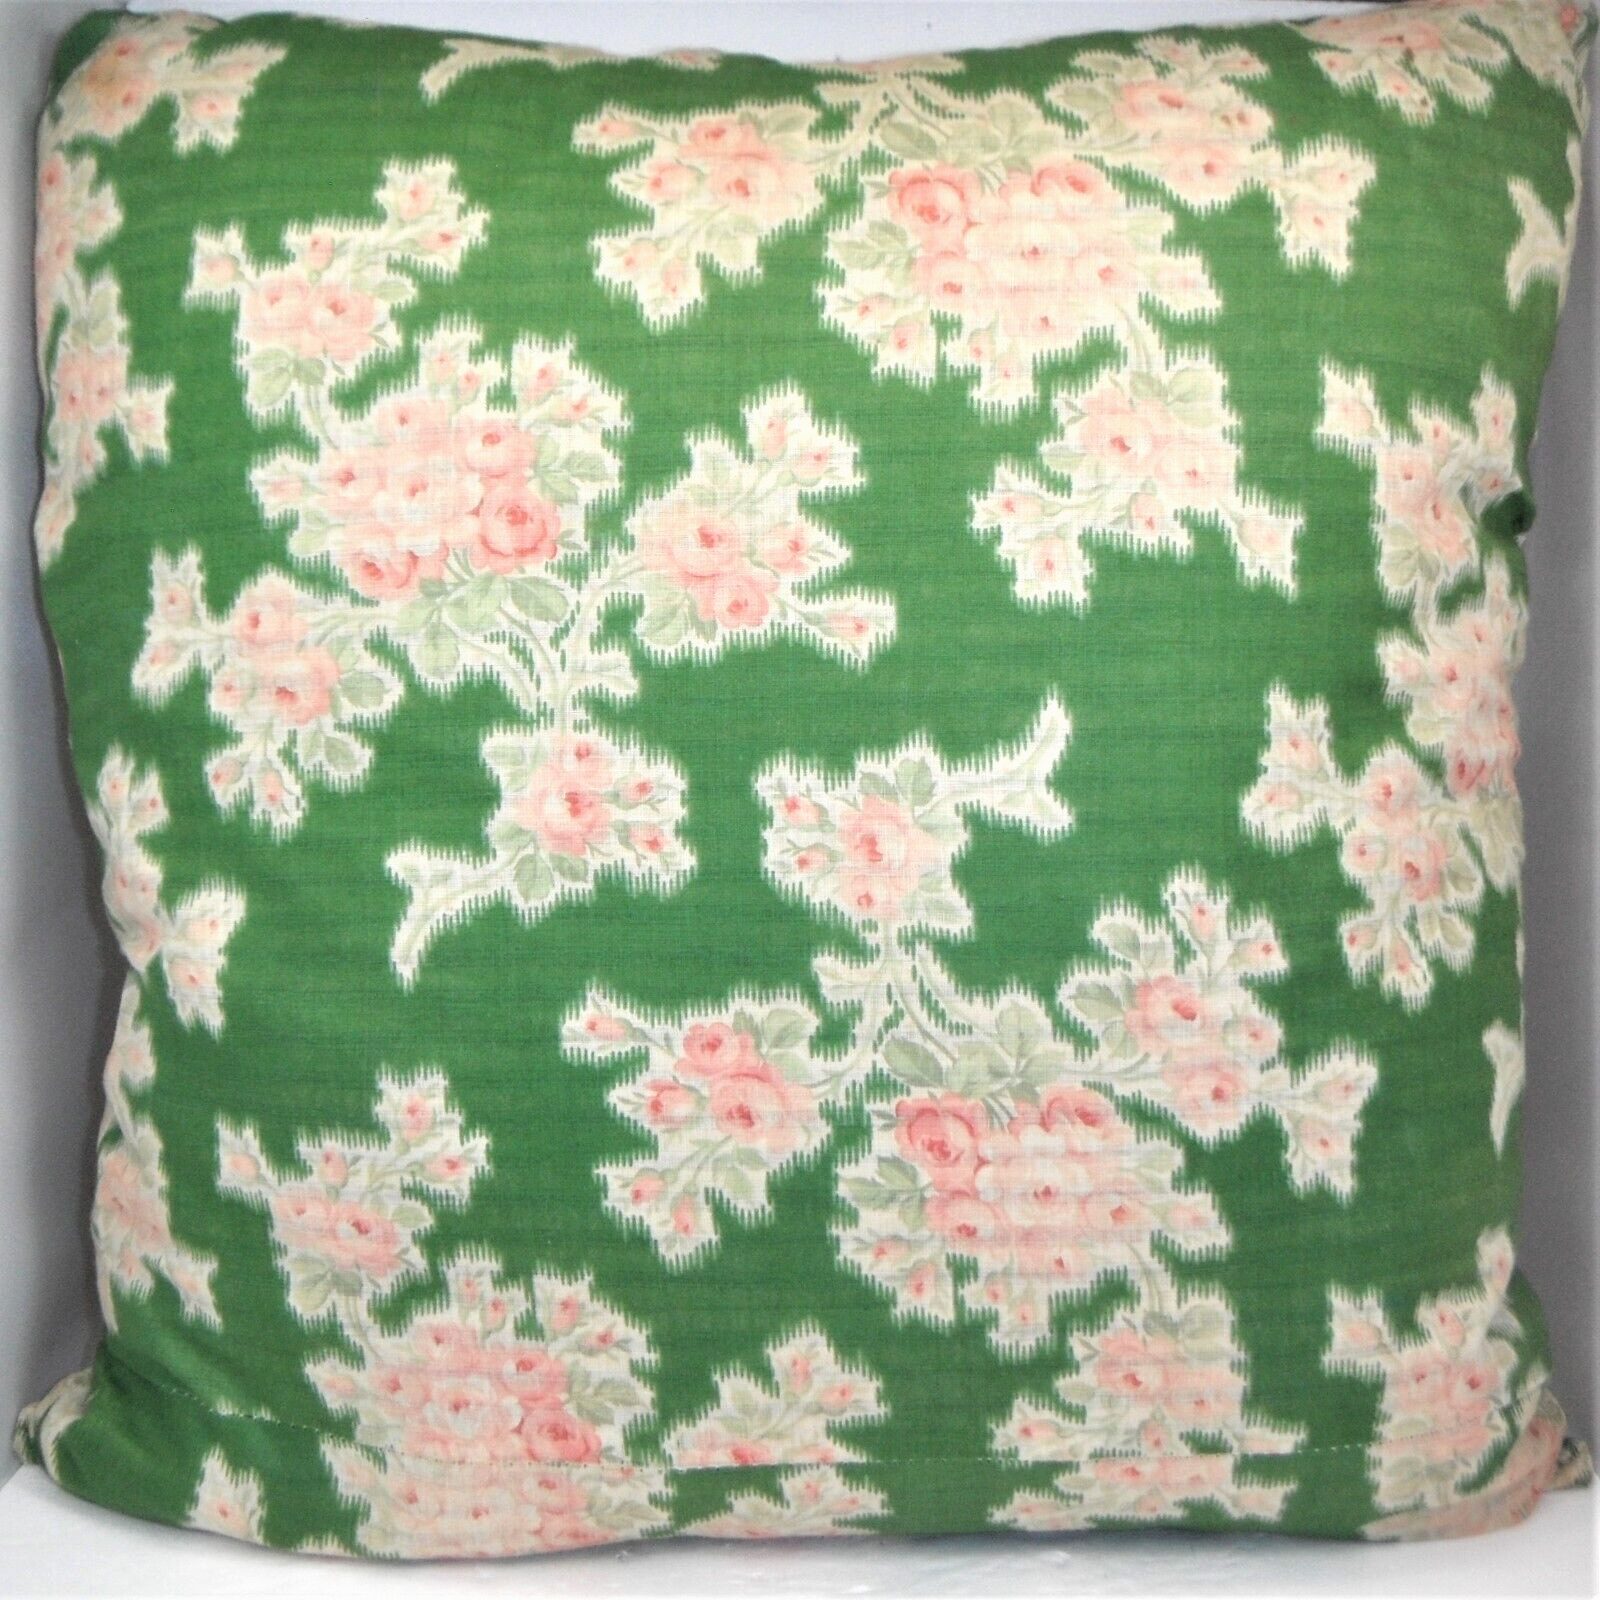 52 signature cloth embroidery throw pillow circa 1940 vintage 18”